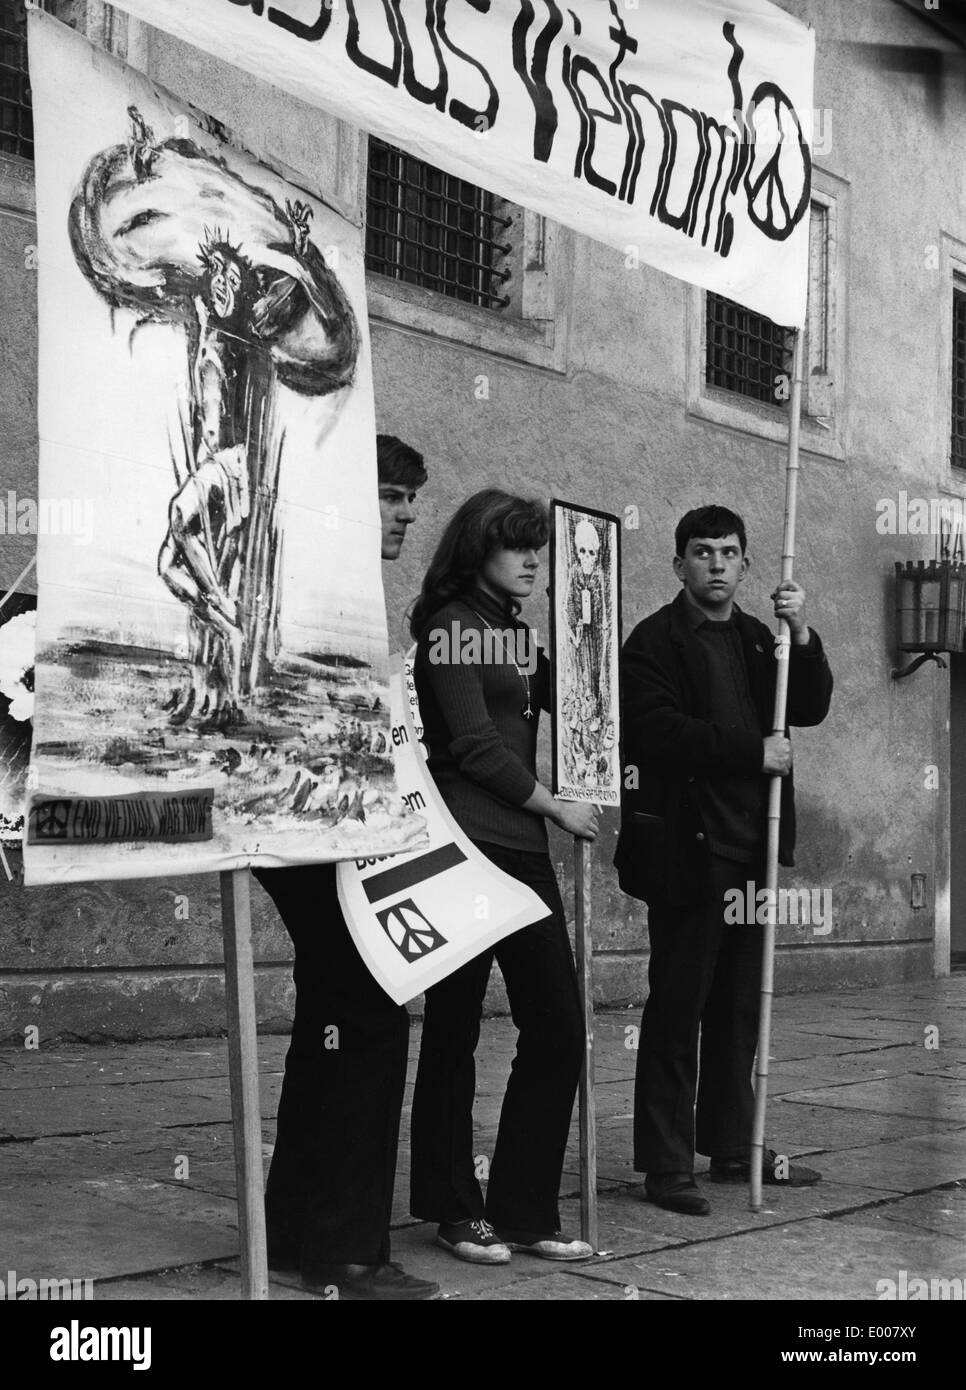 Protest gegen den Vietnamkrieg in Augsburg, 1966 Stockfoto